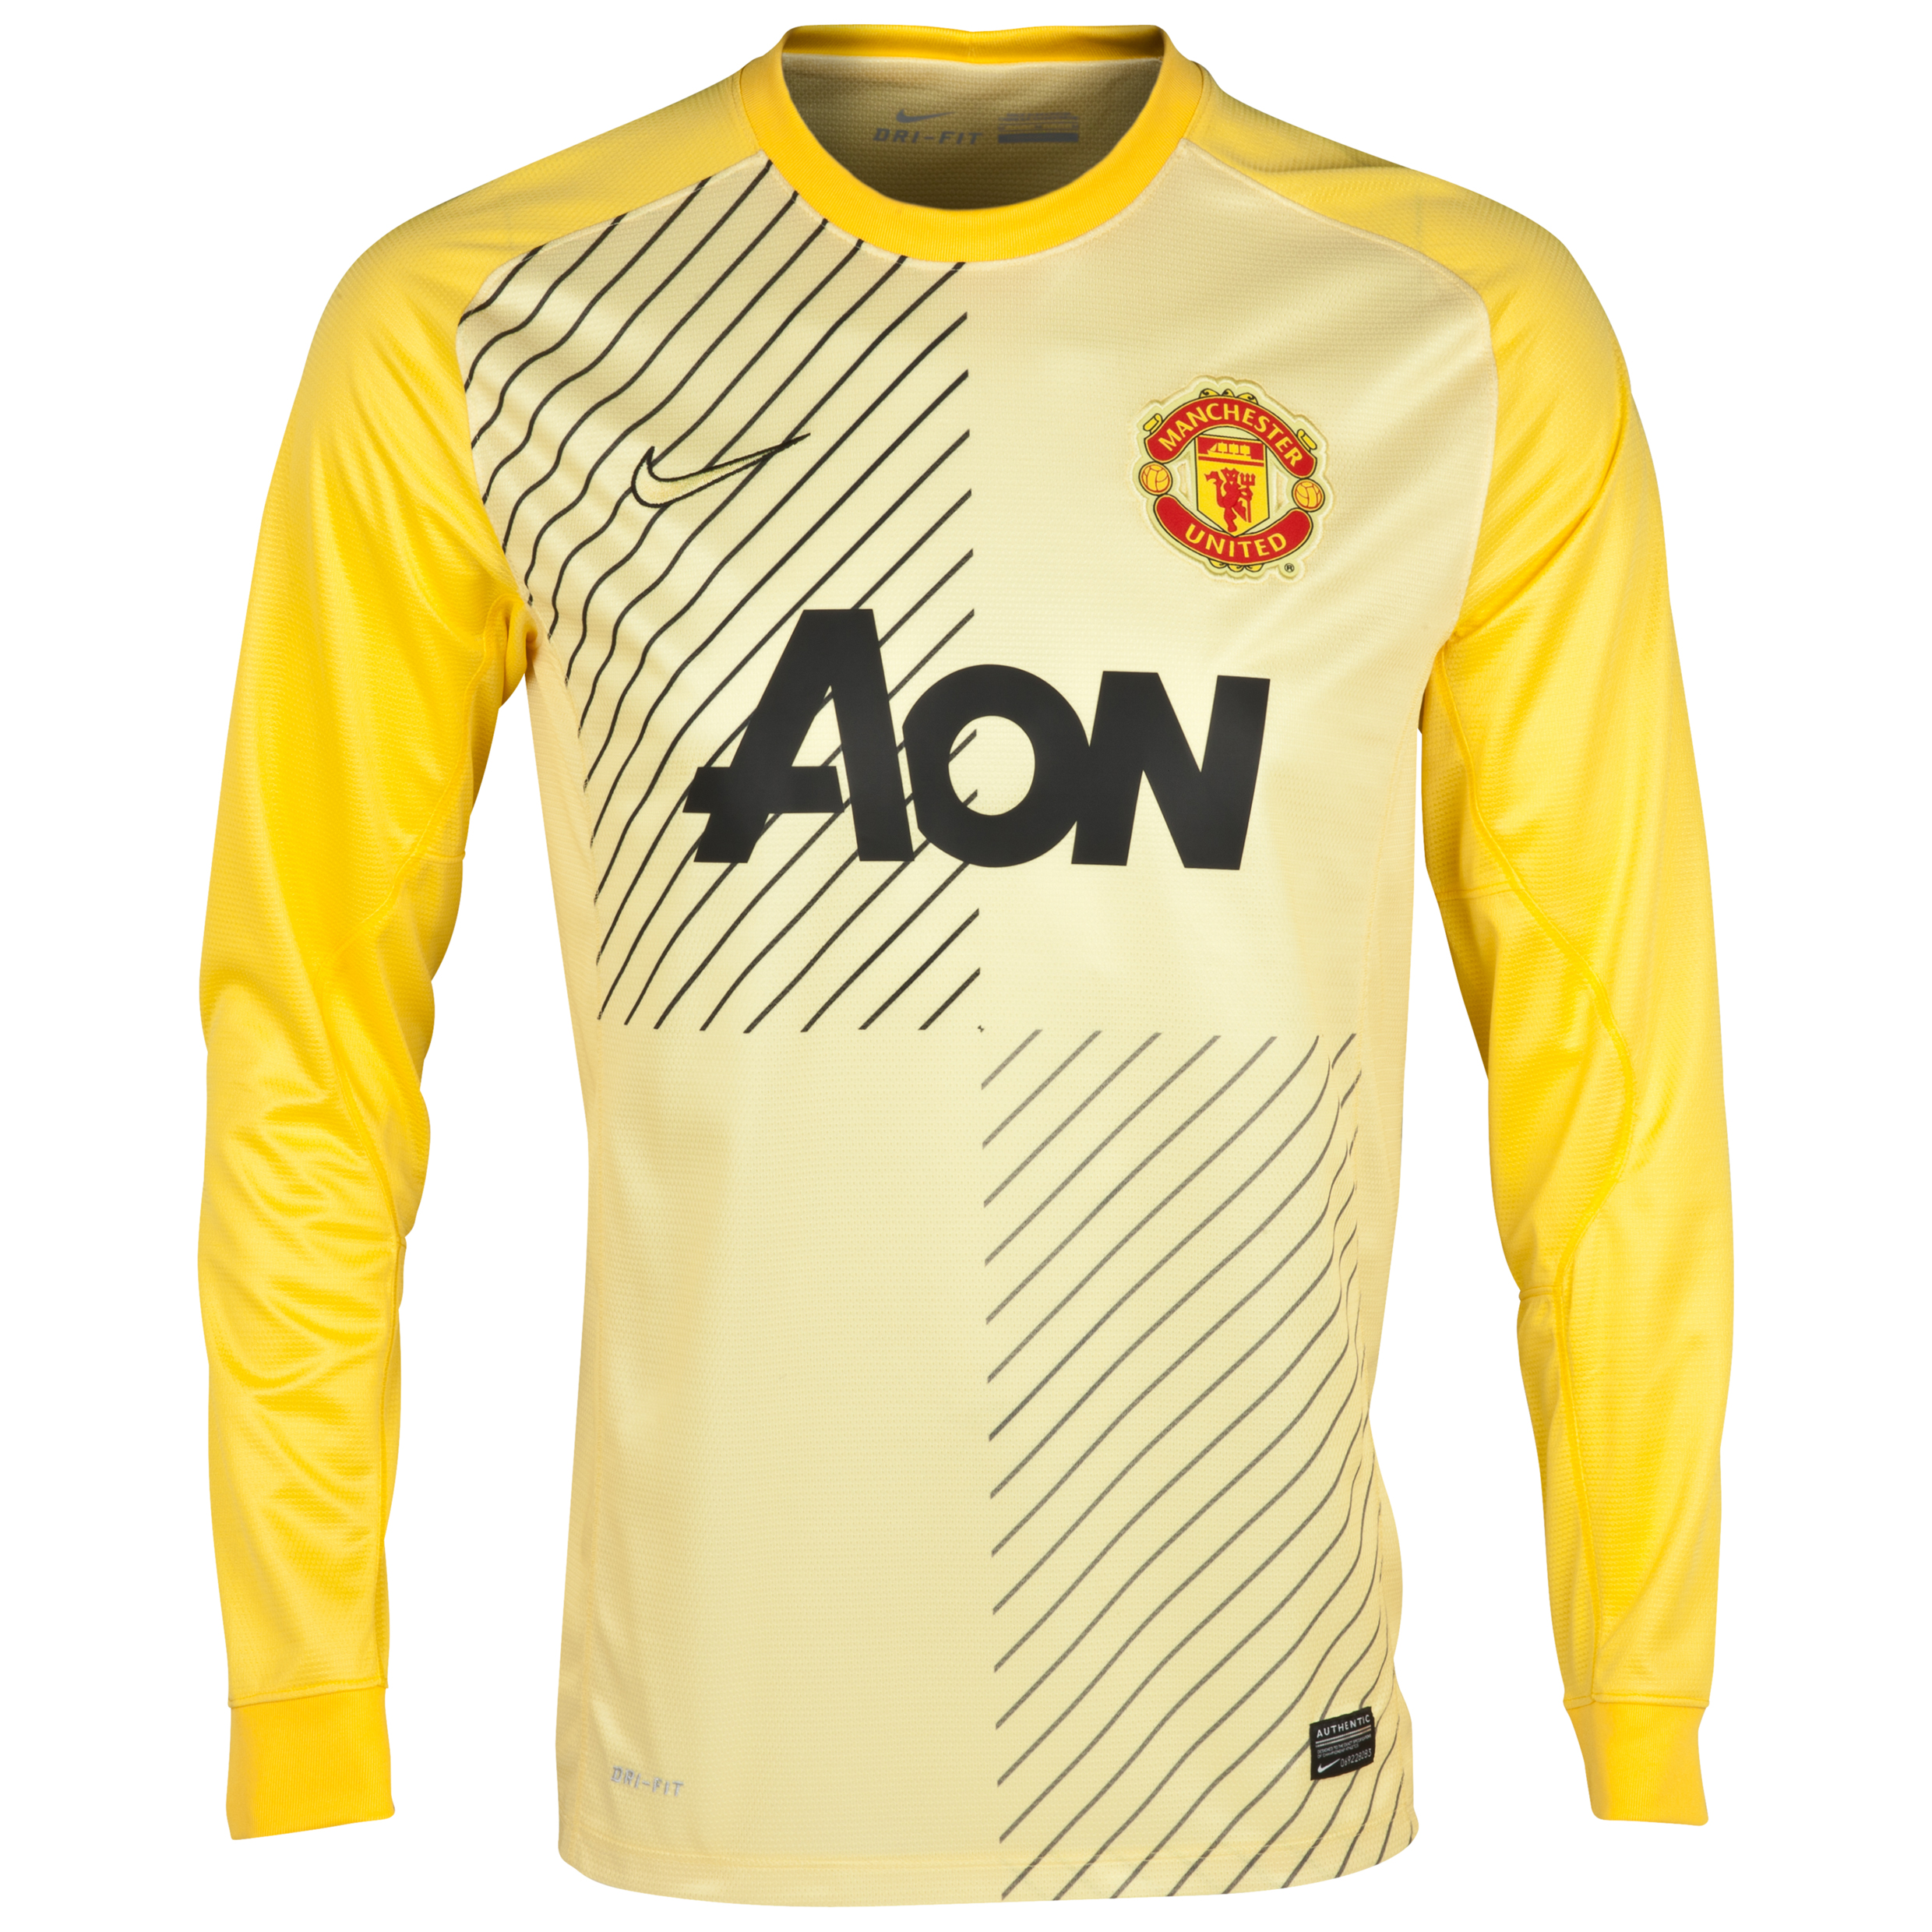 Manchester United Change Goalkeeper Shirt 2013/14